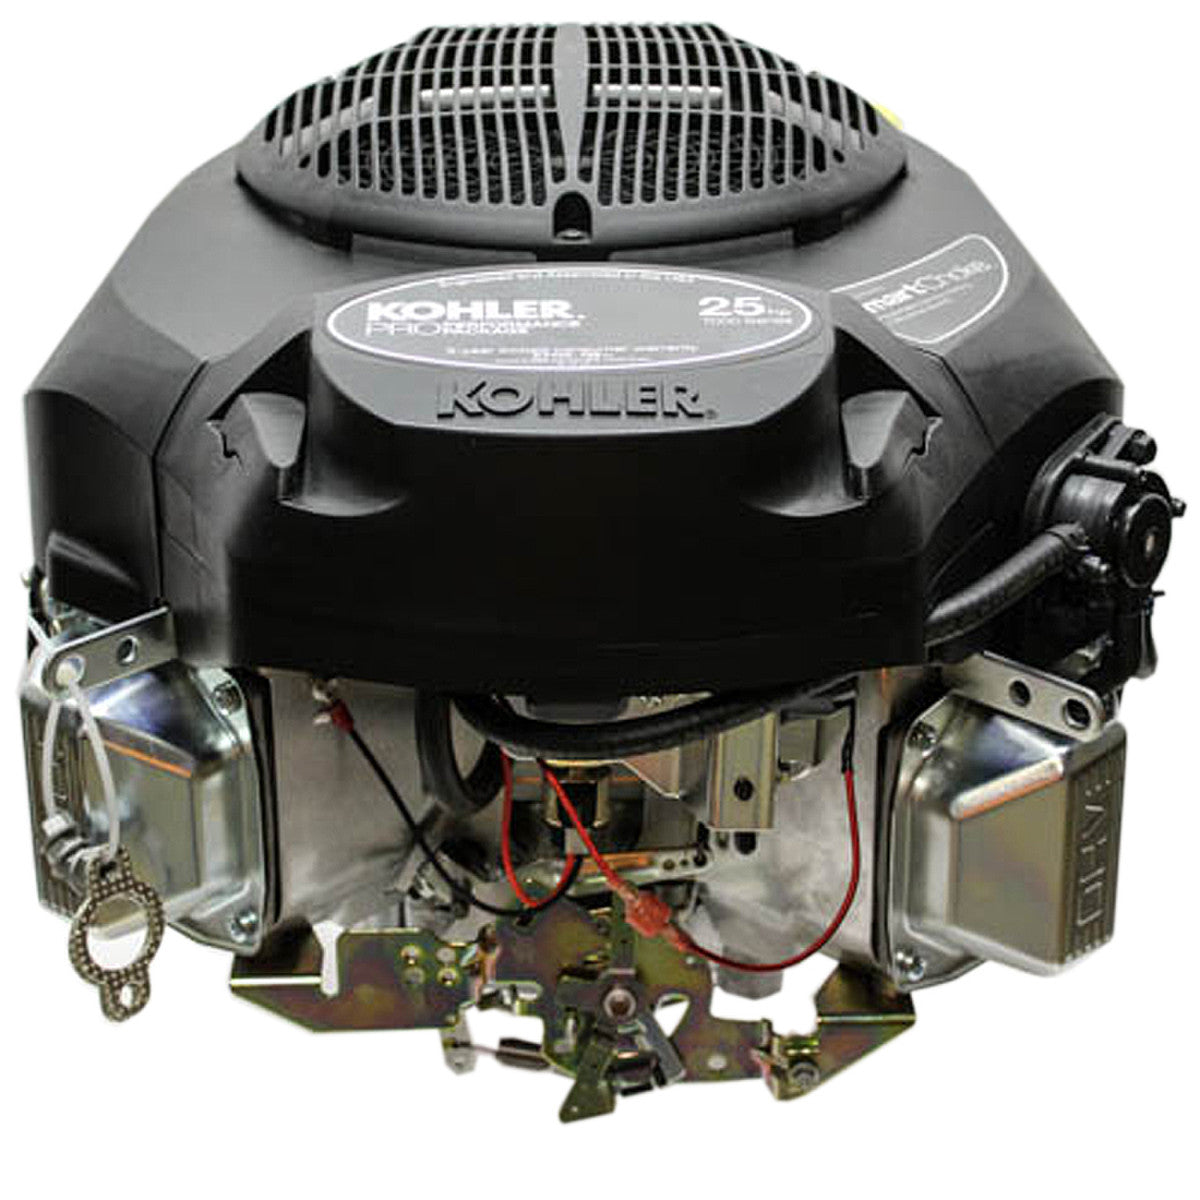 Kohler 7000 Series 25HP Replacement Engine #KT740-3088